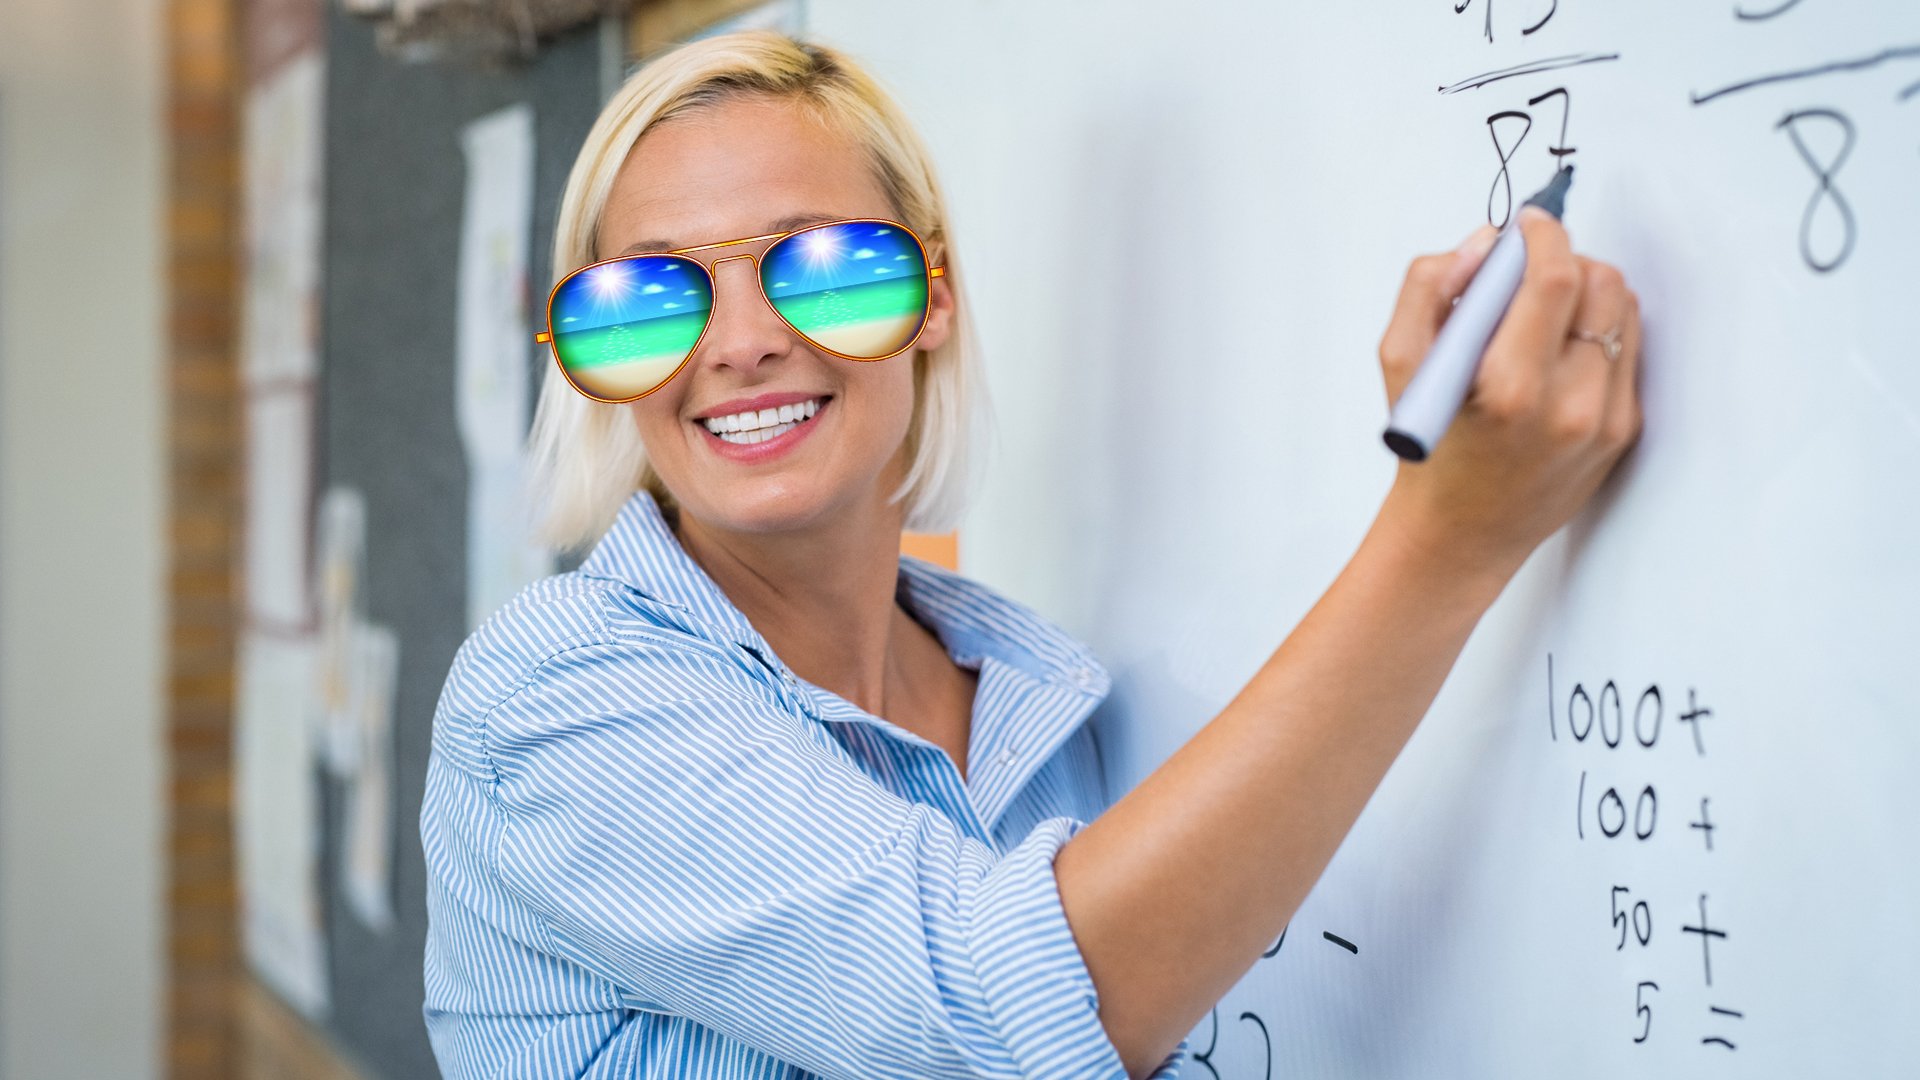 A teacher wearing sunglasses while writing on the wipe board 